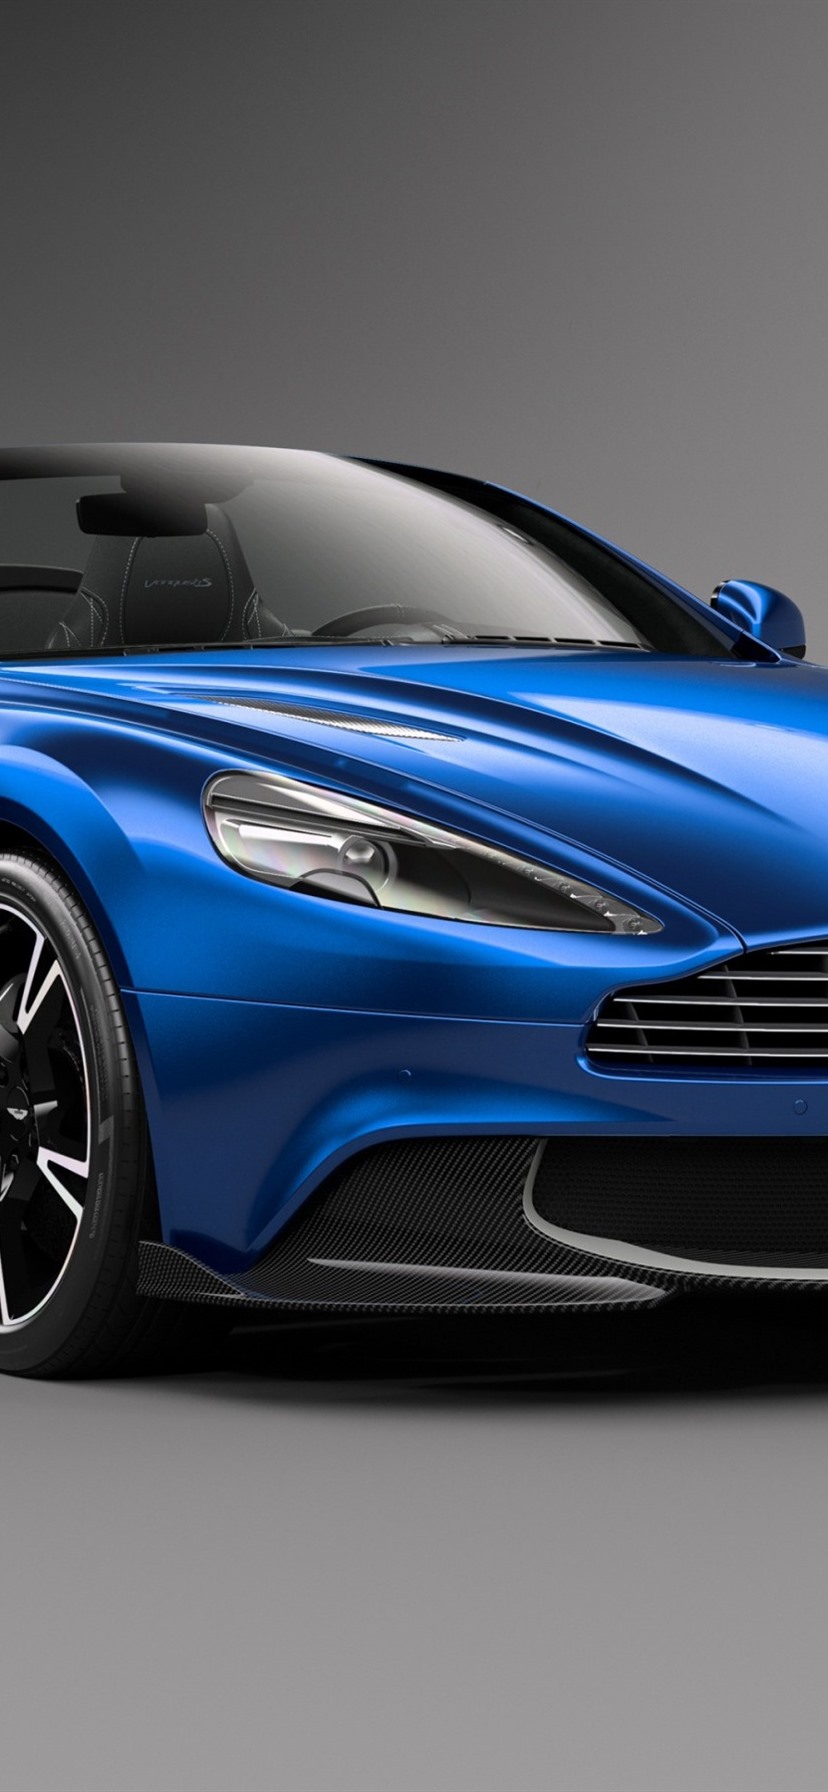 Iphone Wallpaper Aston Martin Vanquish S Blue Car - Aston Martin Vanquish Price South Africa - HD Wallpaper 